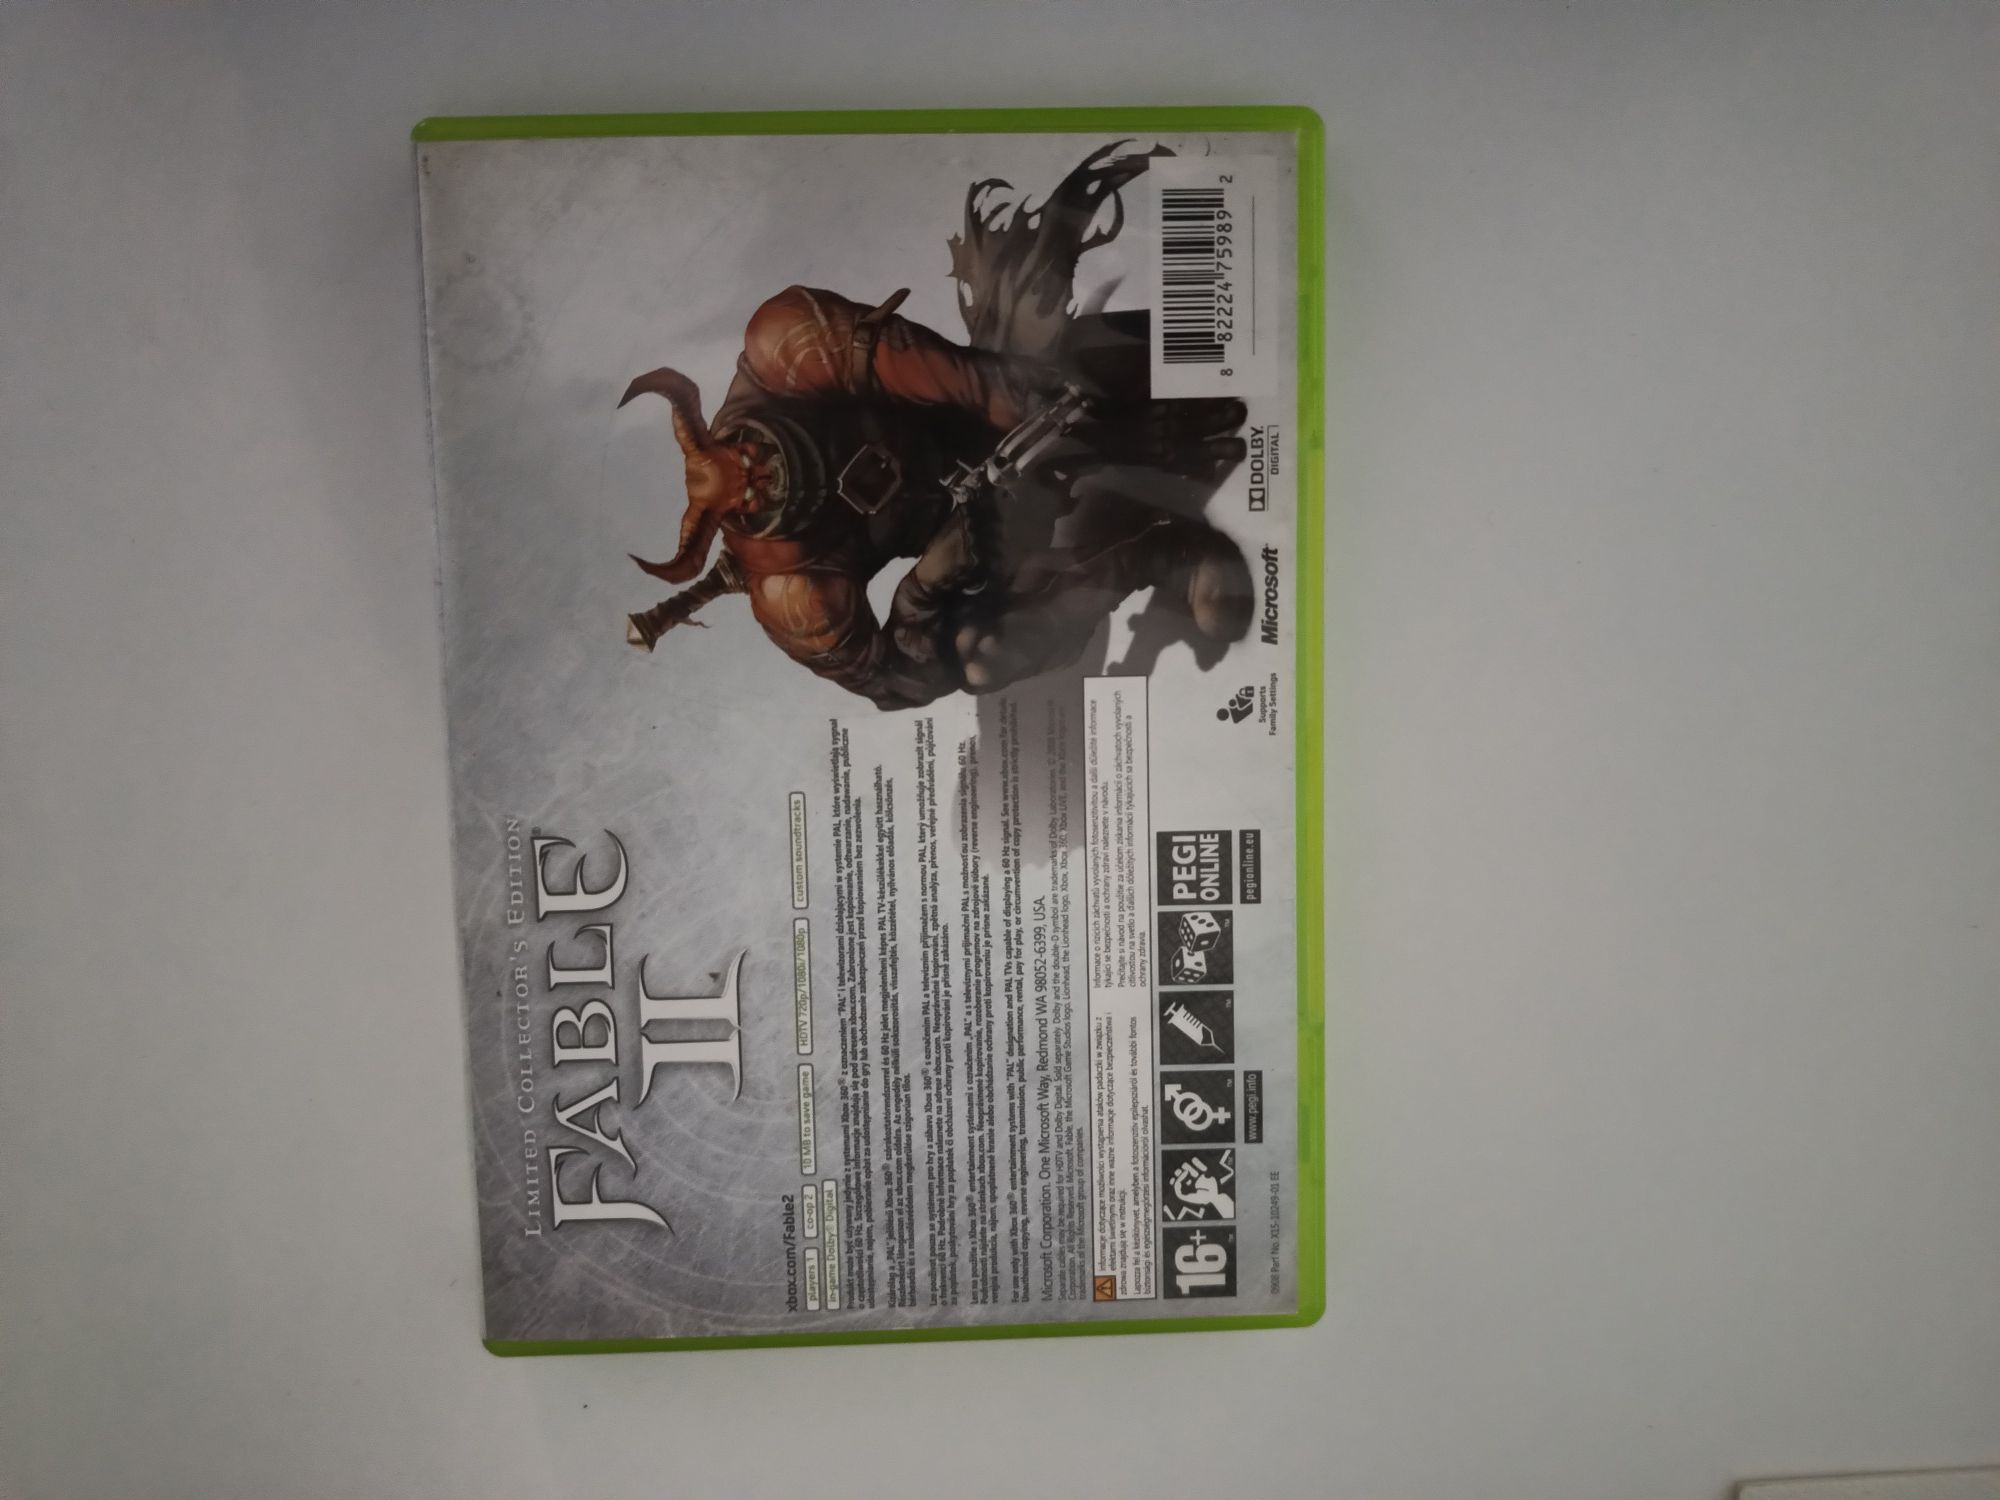 Gra Xbox 360 Fable II Limited Collectors Edition -PL- + Bonus Disc